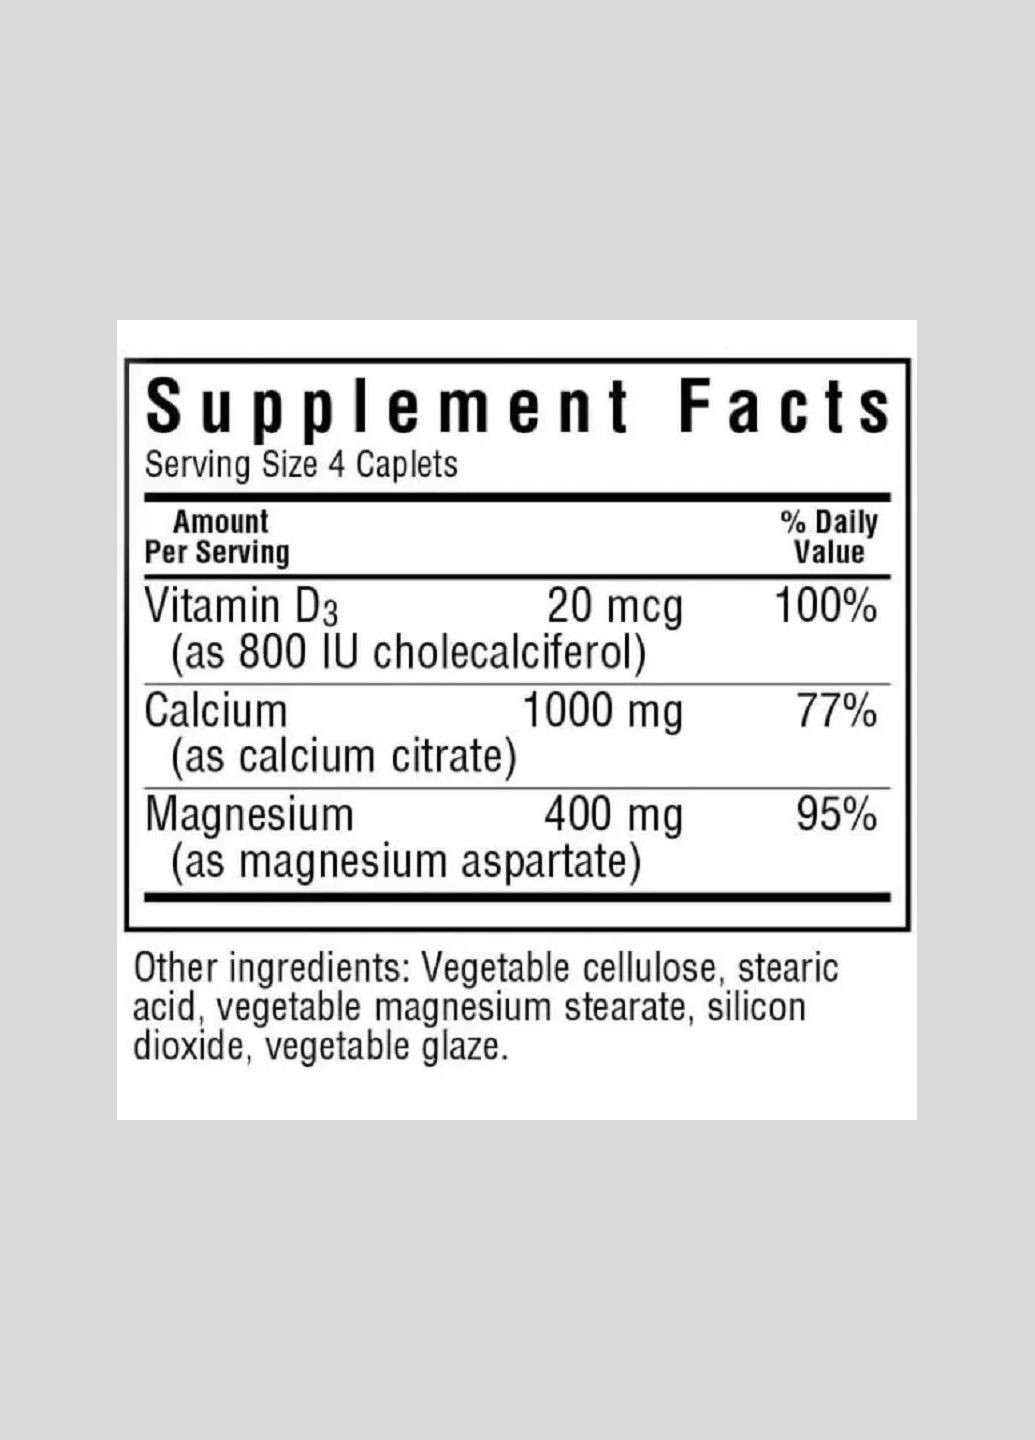 Цитрат Кальция, Магний + Витамин D3,, 90 капсул Bluebonnet Nutrition (292008478)